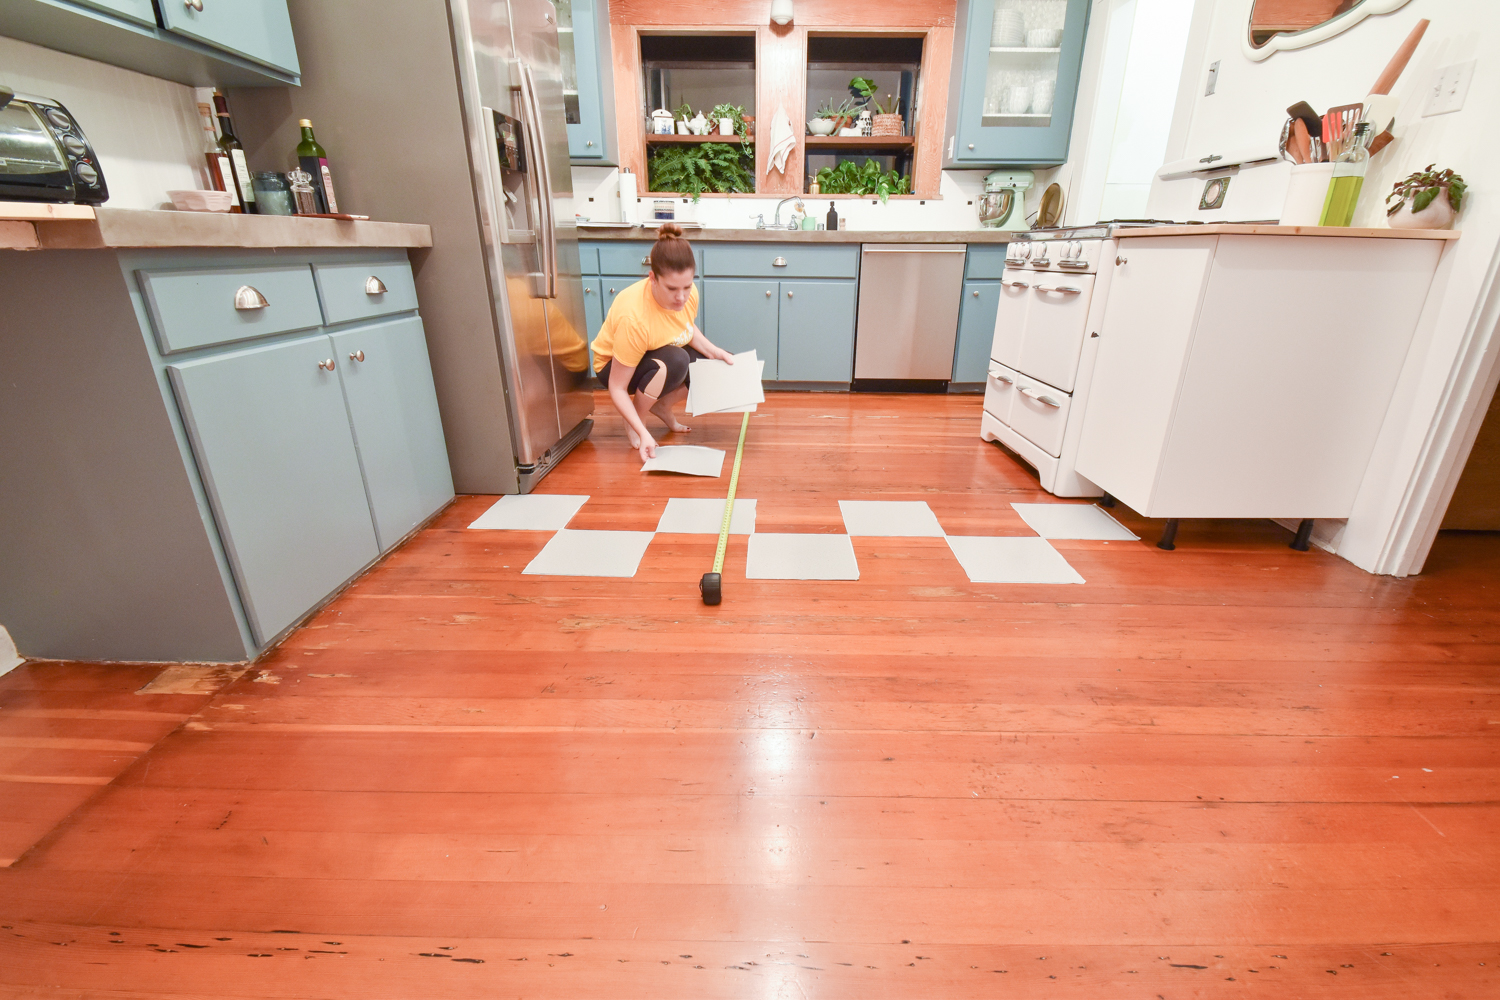 A Diy Kitchen Transformation Using Vinyl Floor Tiles Tutorial The Gold Hive